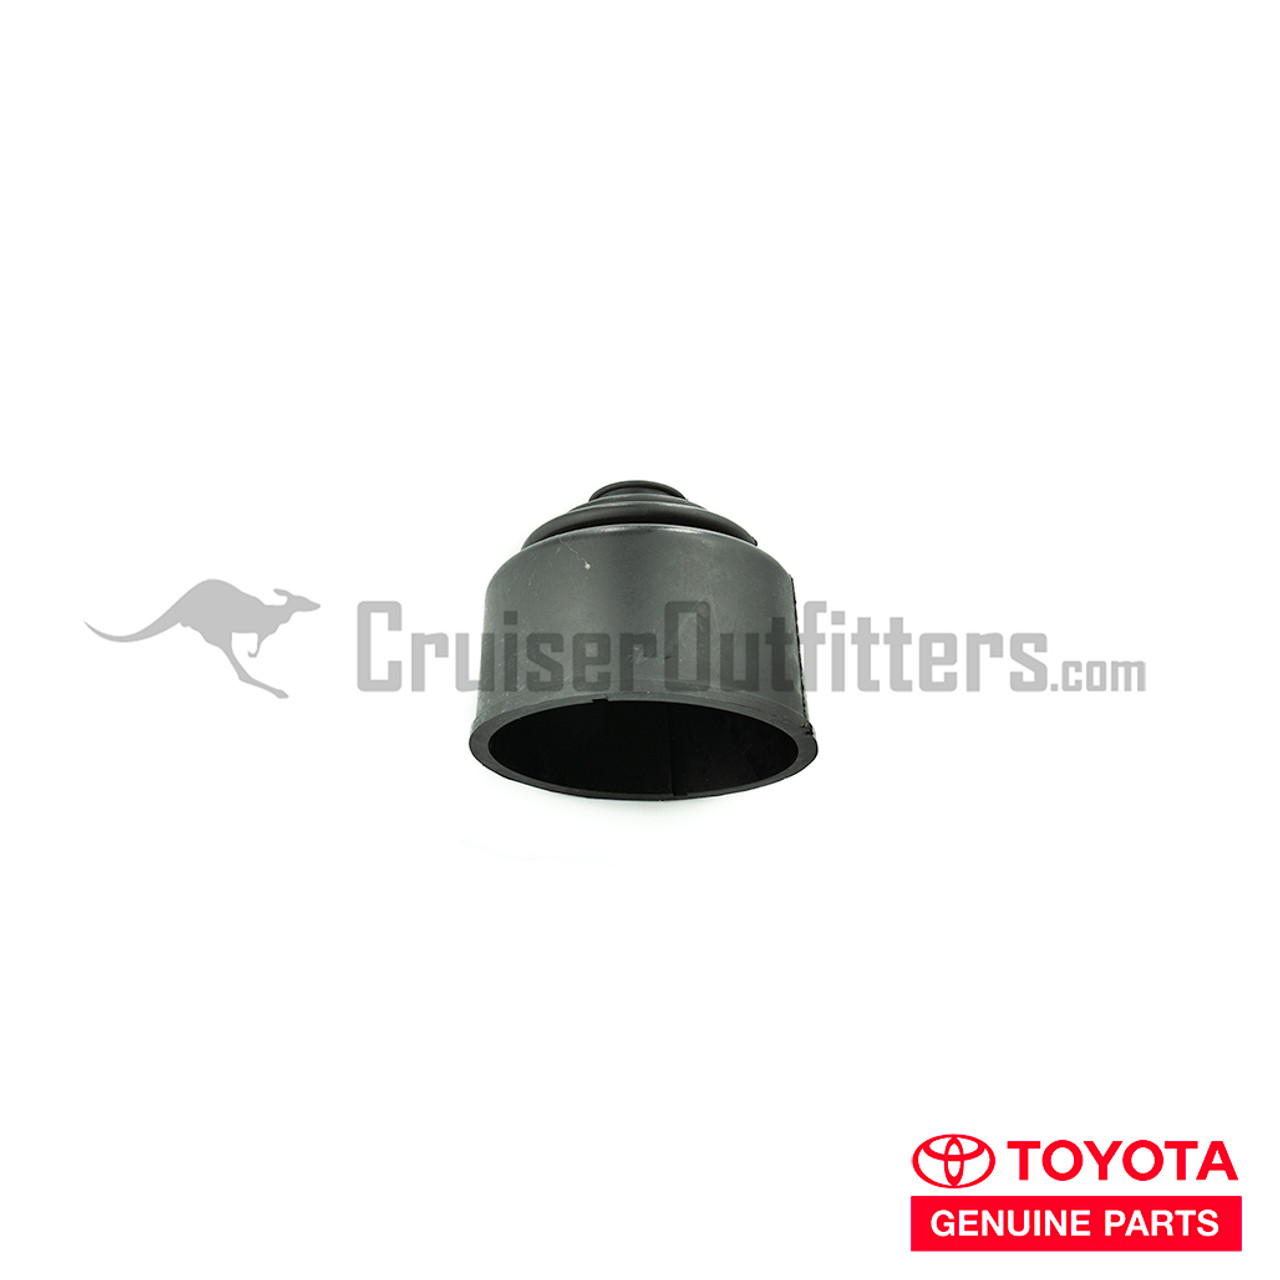 Transmission Inner Dust Boot - OEM Toyota - Fits (INT55011OEM)